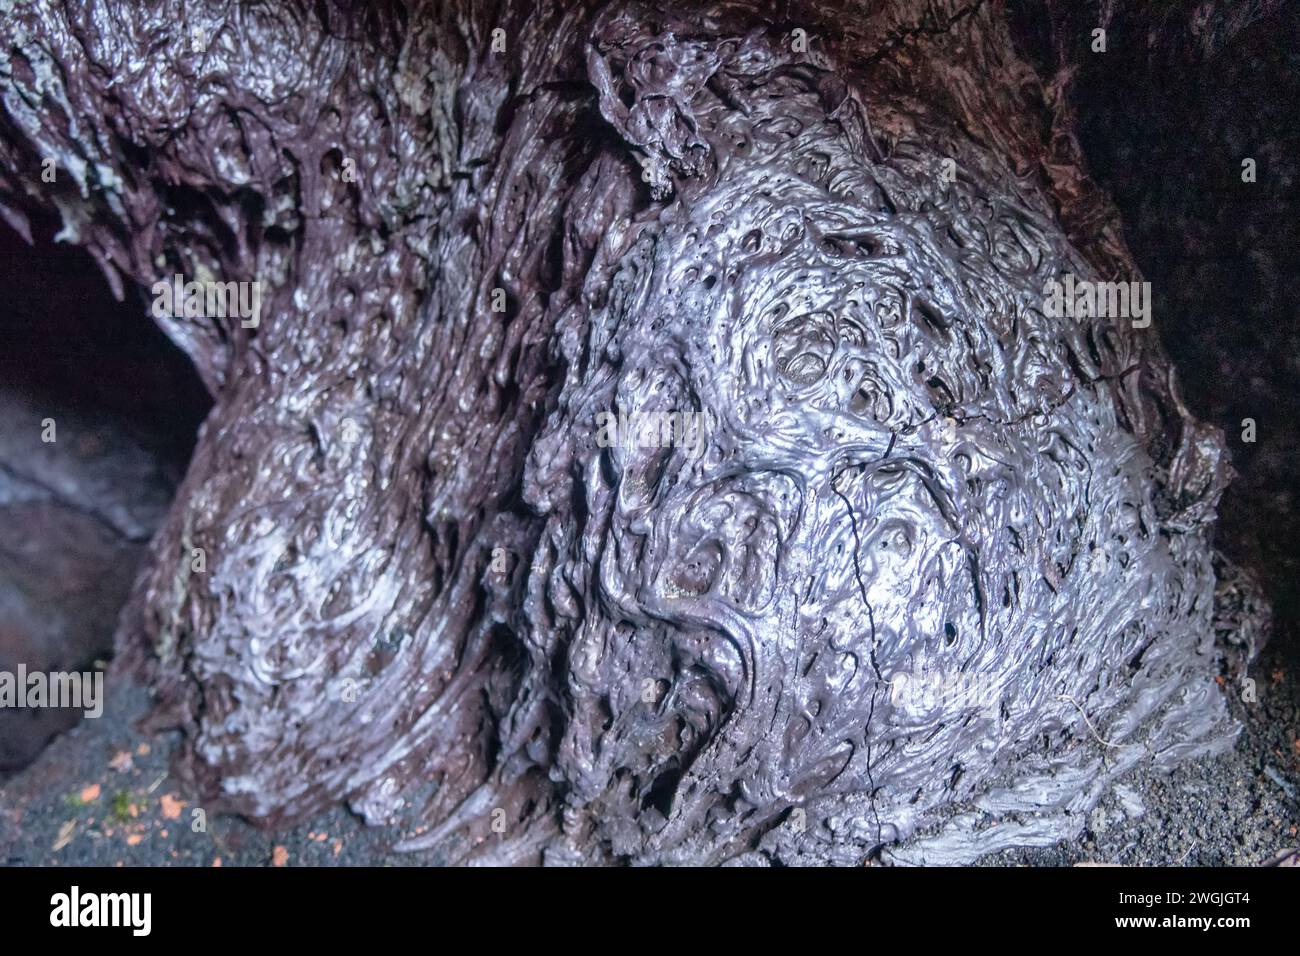 Uber verschiedene Formen basaltverfestigter Lava. Die filamentöse oder kapilläre Form der Lava ist Viskose Lava in einer Lavahöhle, dünn flüssige Lava ist dünn-fl Stockfoto